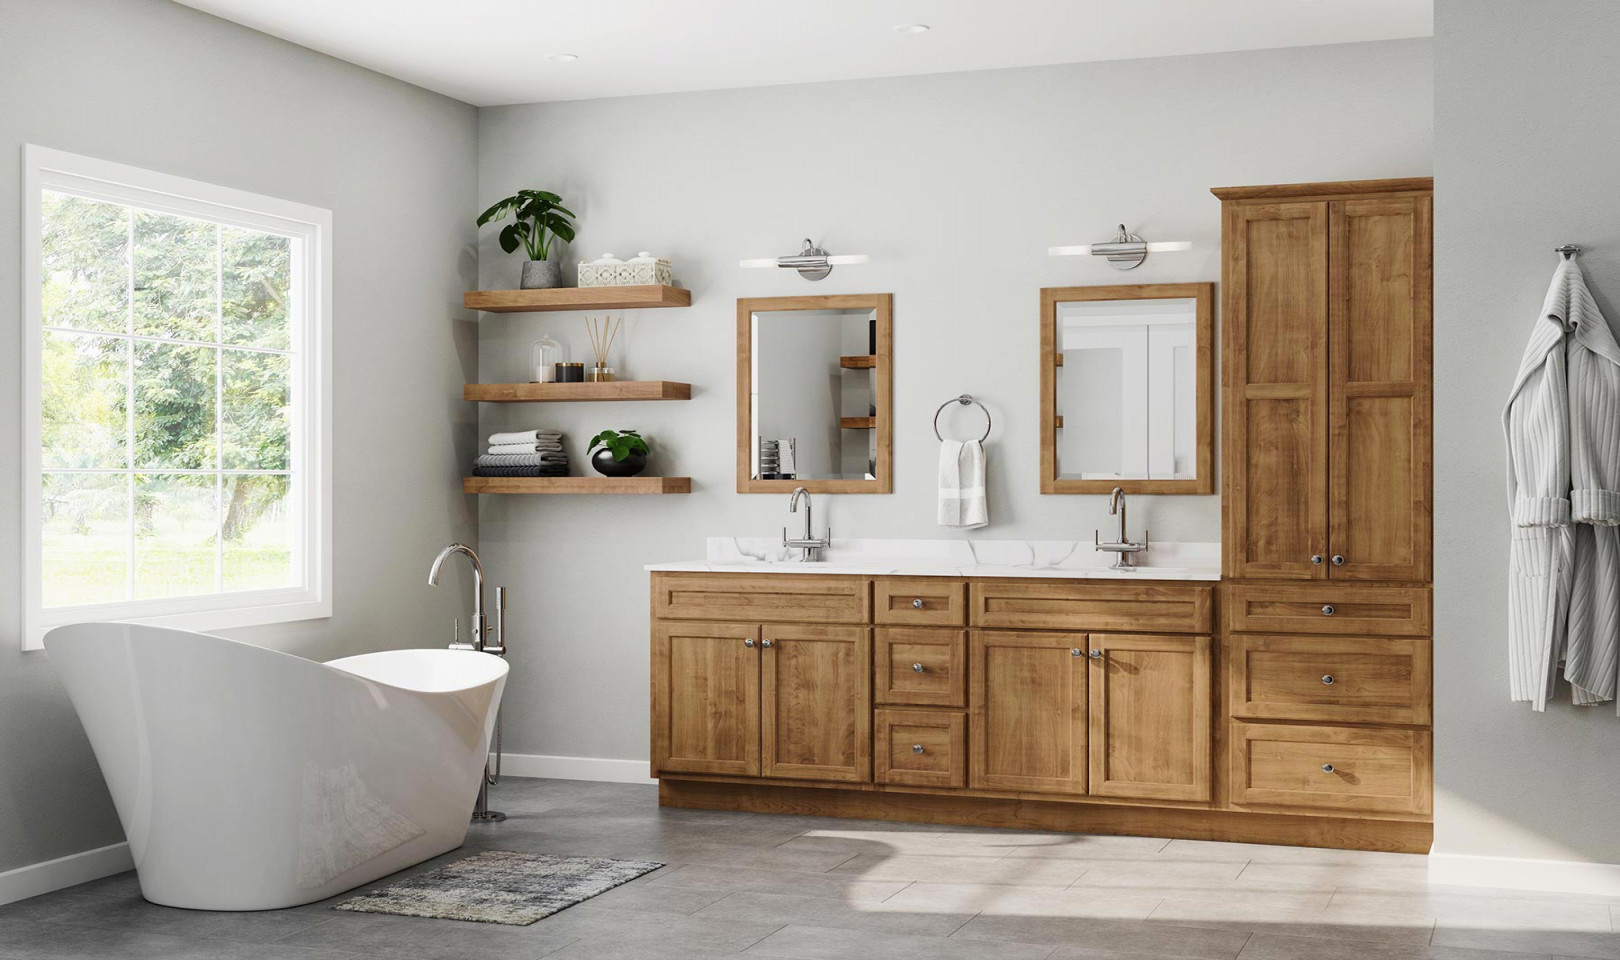 Trend Alert: Light Wood Bathroom Vanity